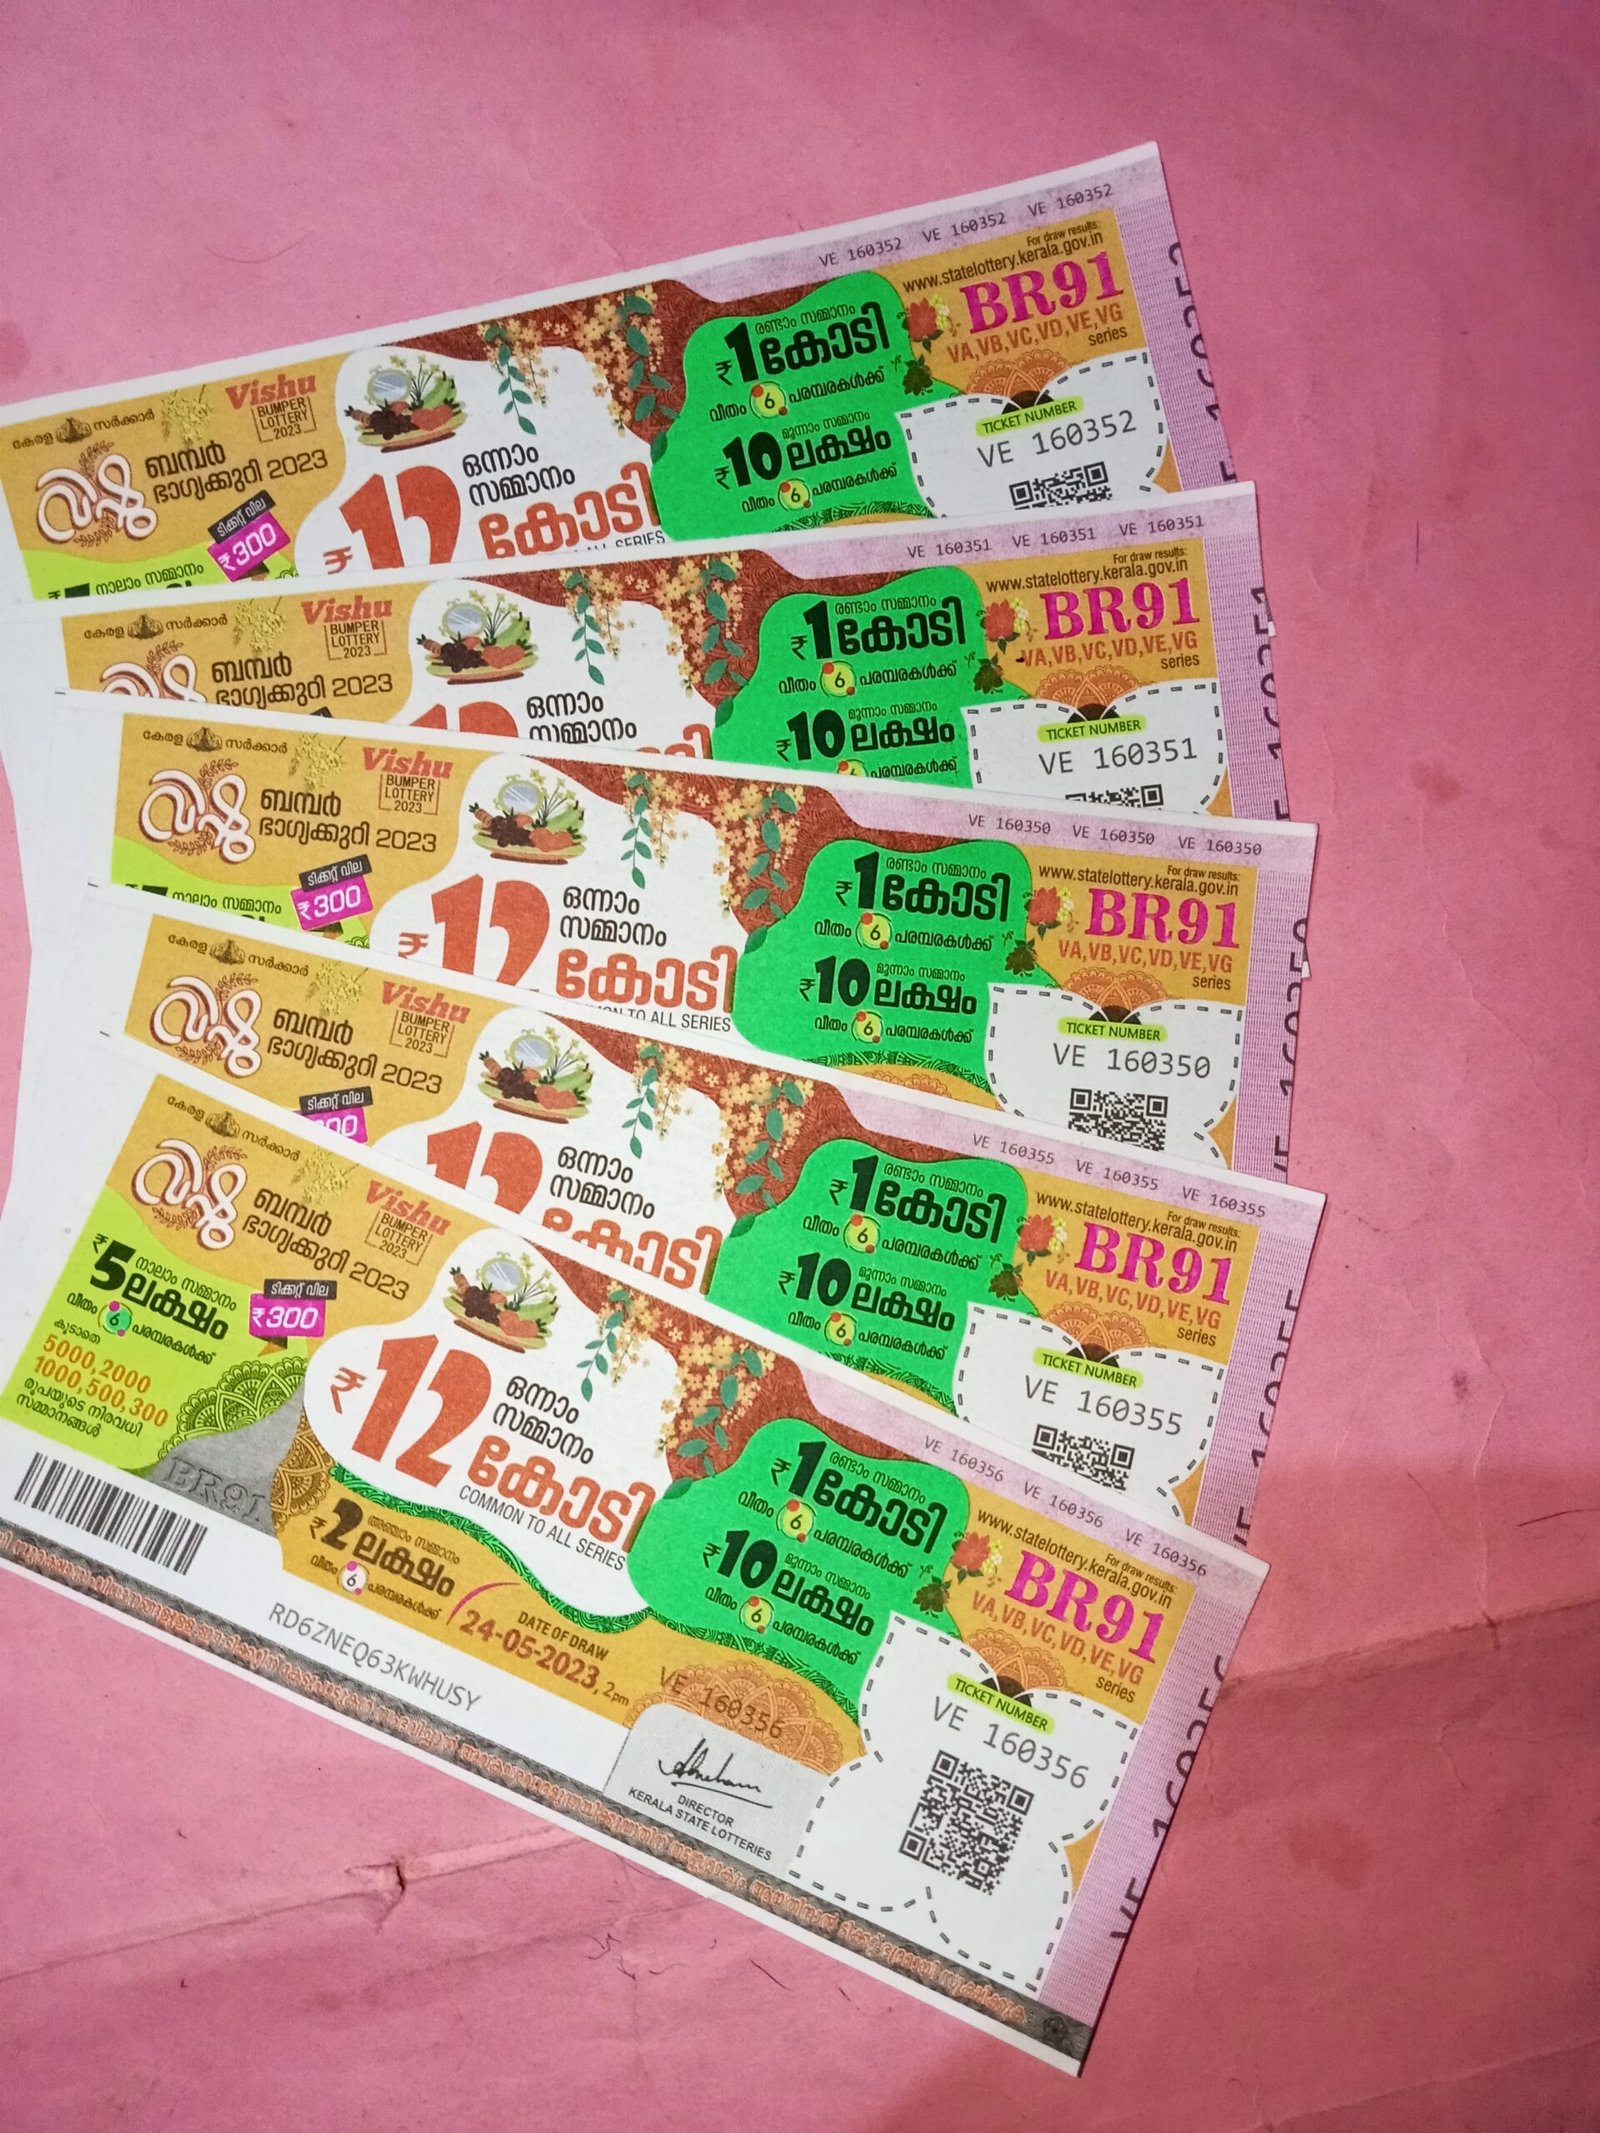 12 crose Vishu Bumper BR91 (2 TICKET) Kerala Lottery Online Buy 12